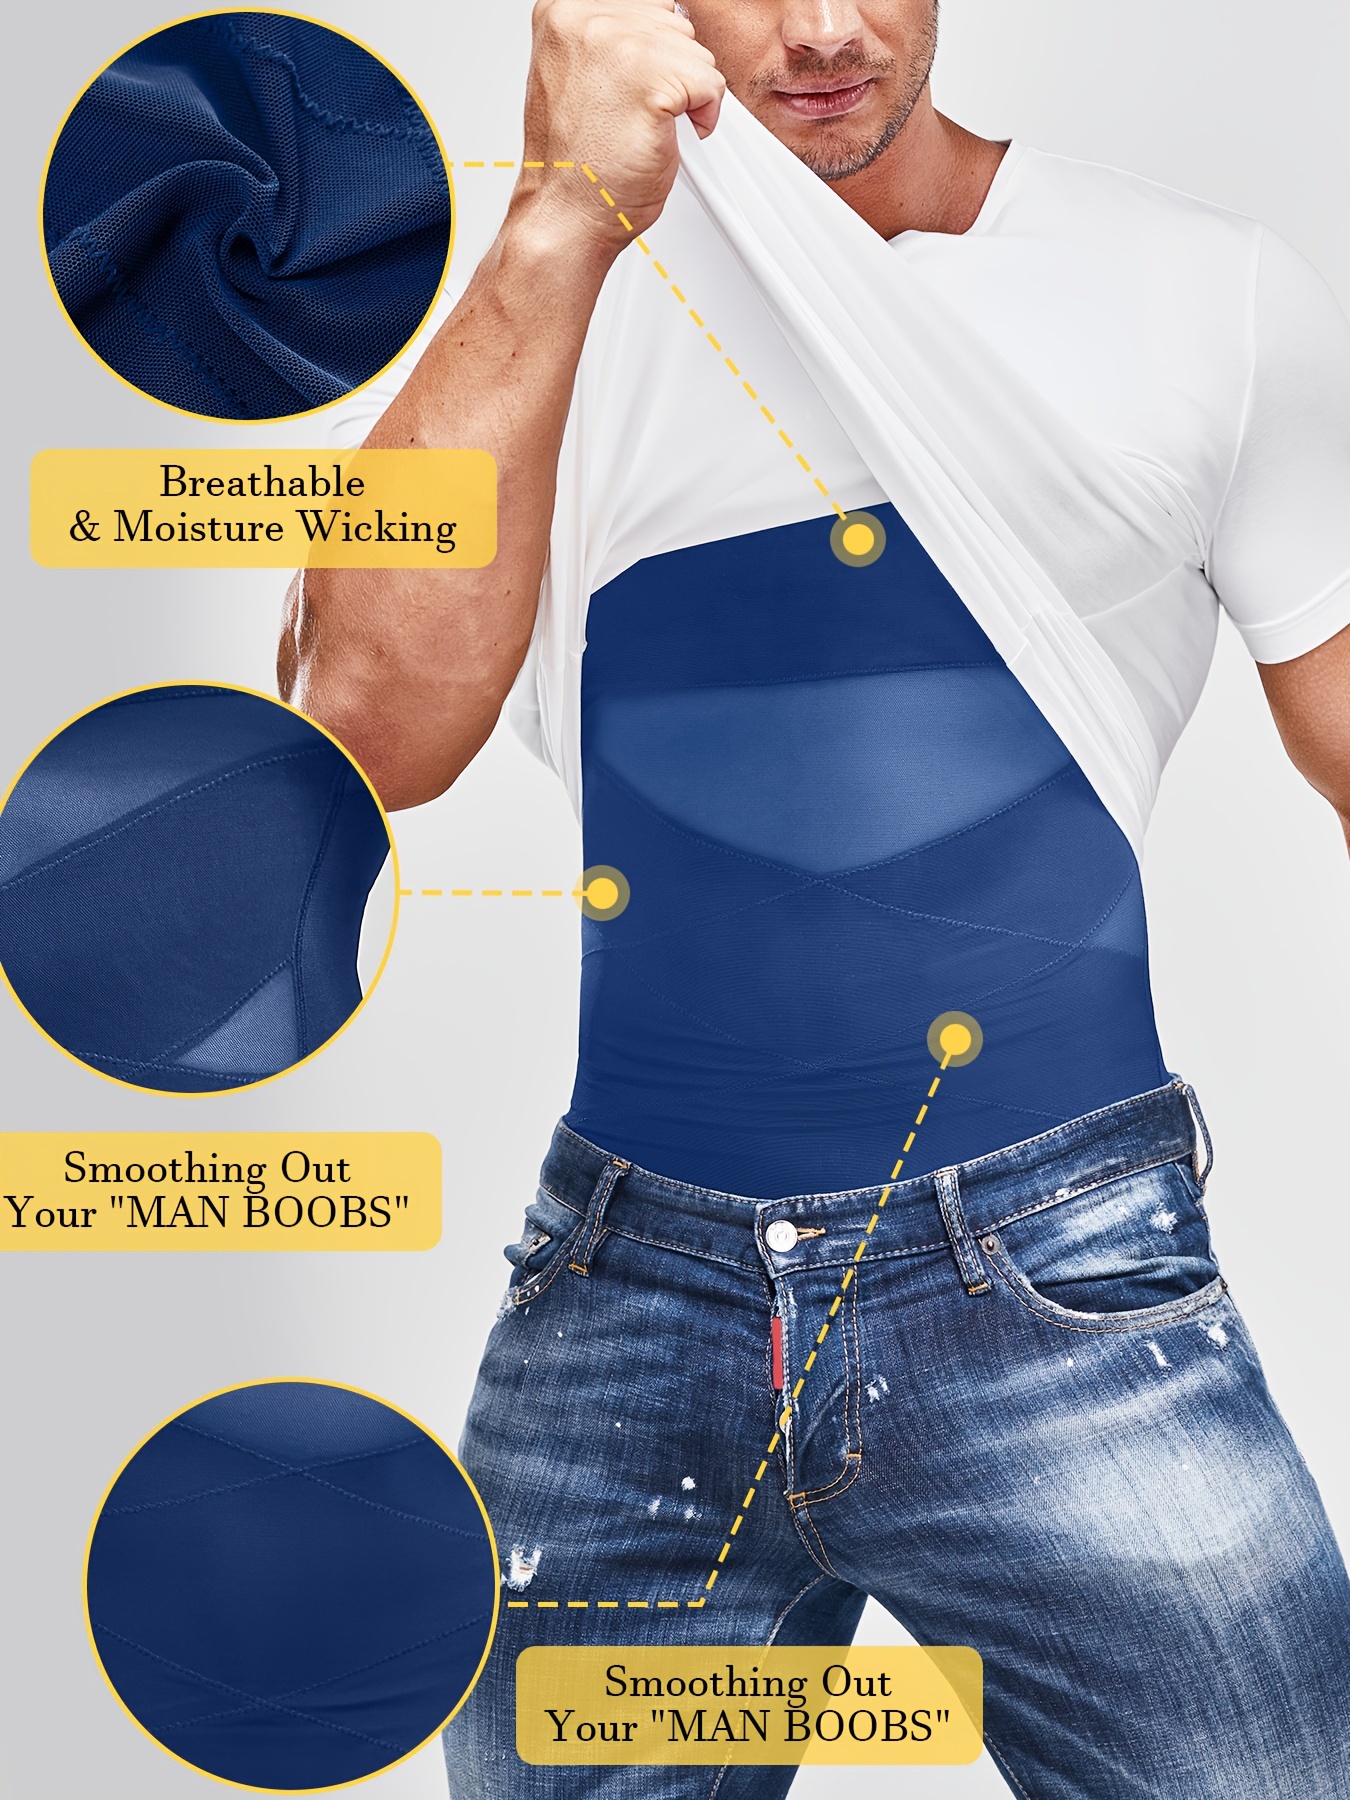 Men Compression Shirt Waist Trainer Body Shaper Slimming Tank Top Workout  Girdle Black S M